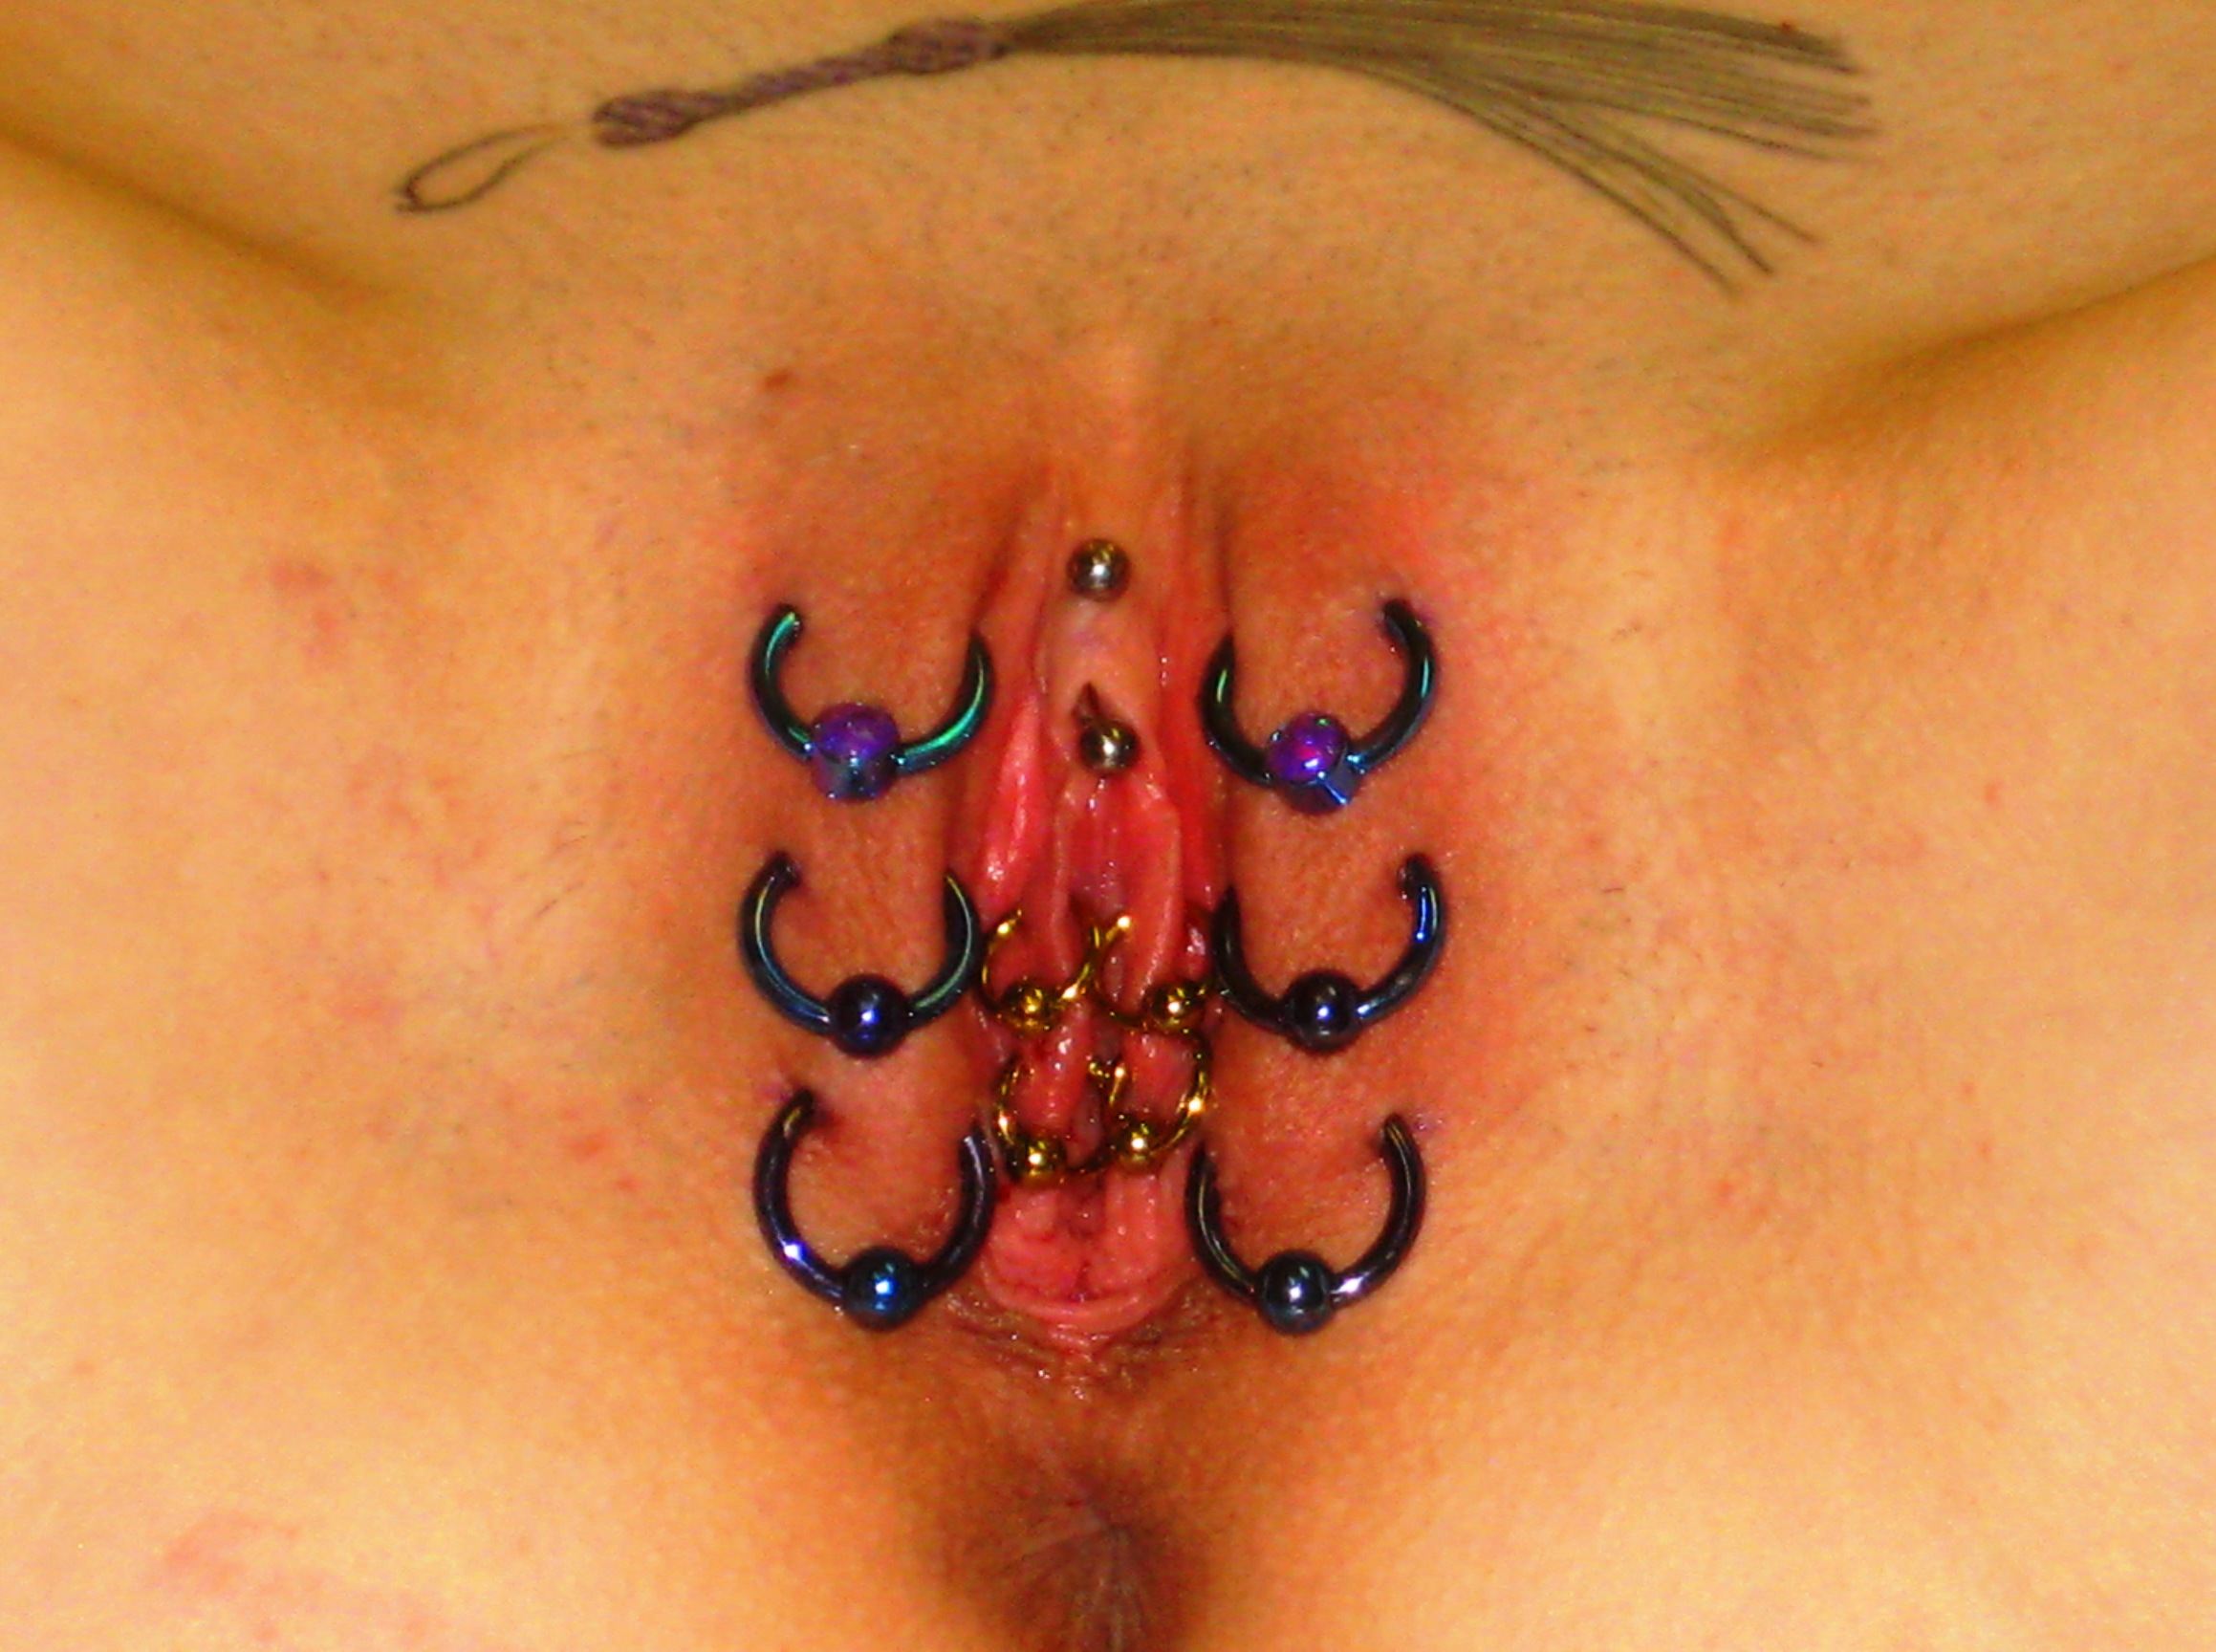 Erotic piercings and tatoos